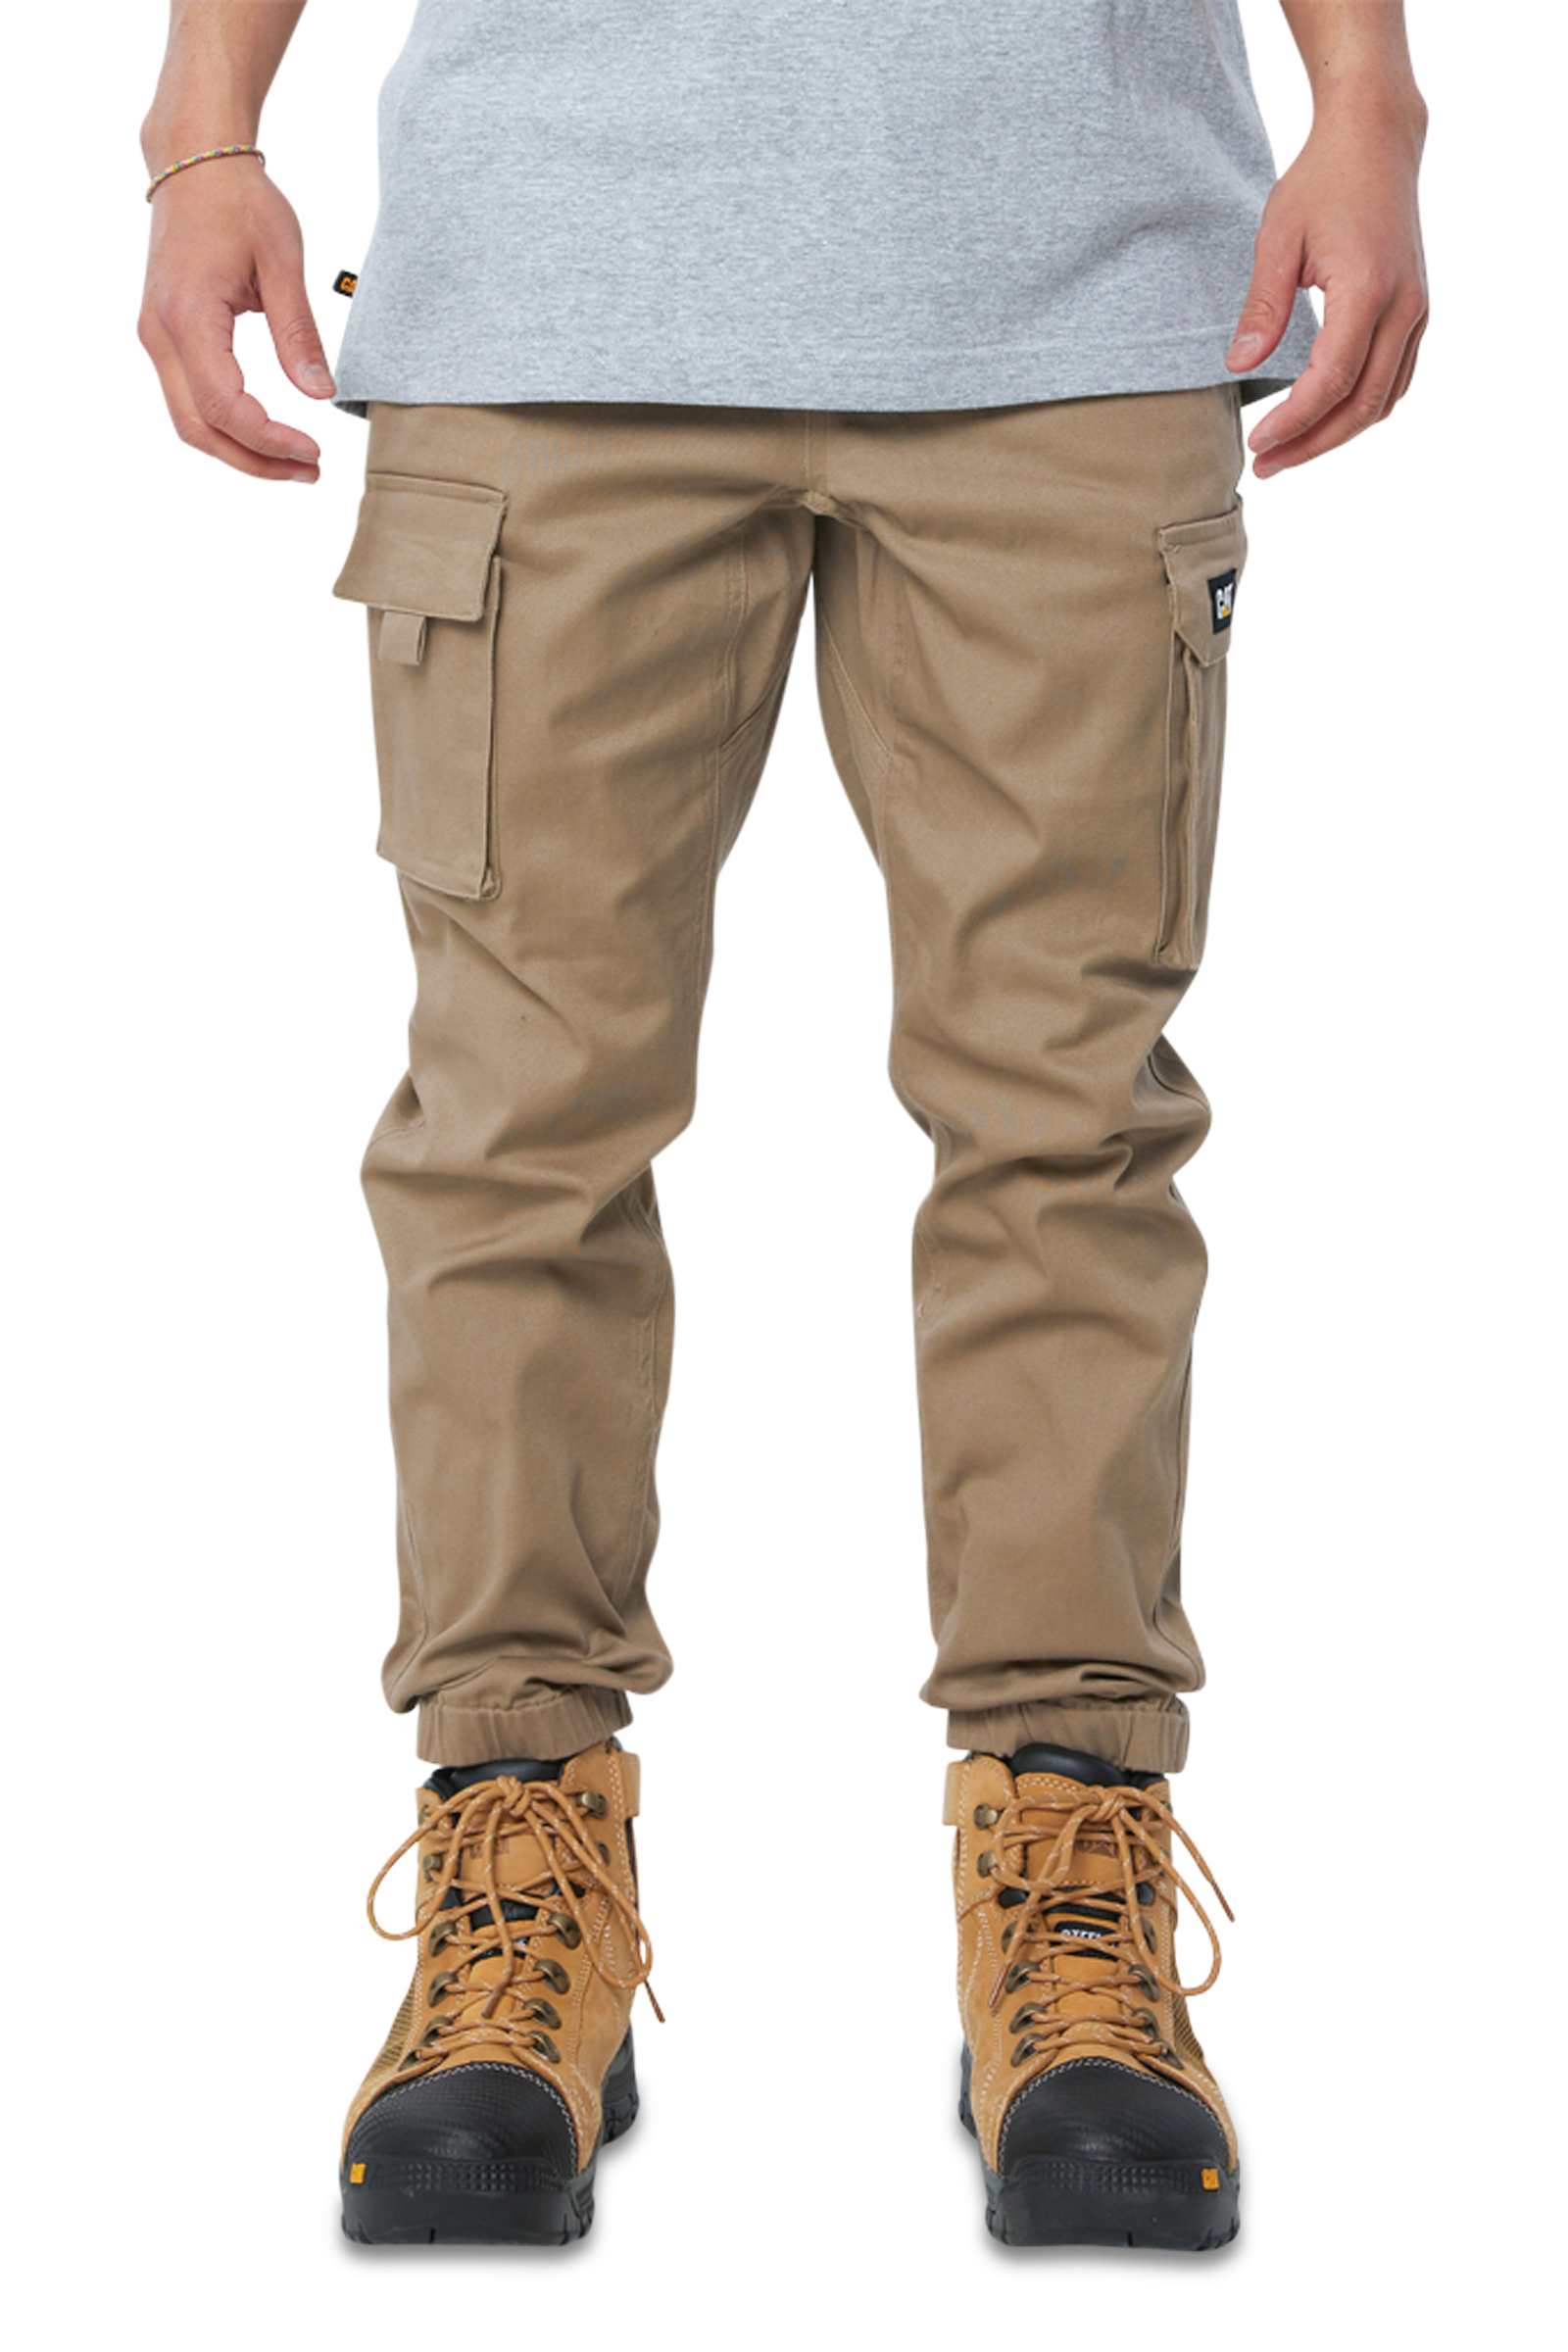 Short CATERPILLAR Beige size L International in Denim - Jeans - 30786936